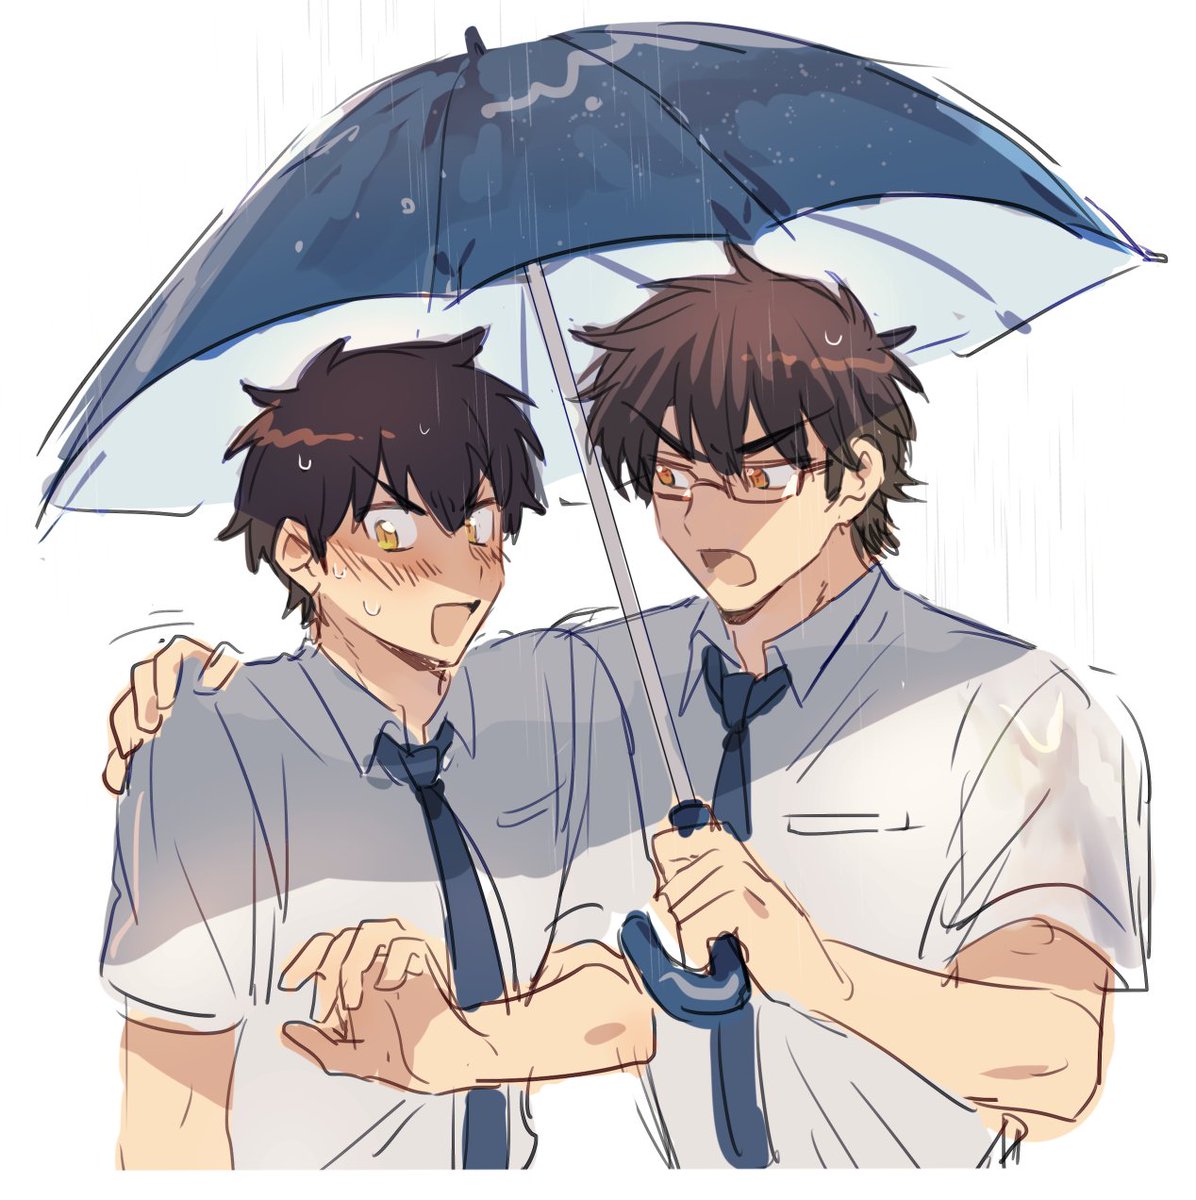 multiple boys 2boys umbrella shared umbrella male focus necktie holding  illustration images